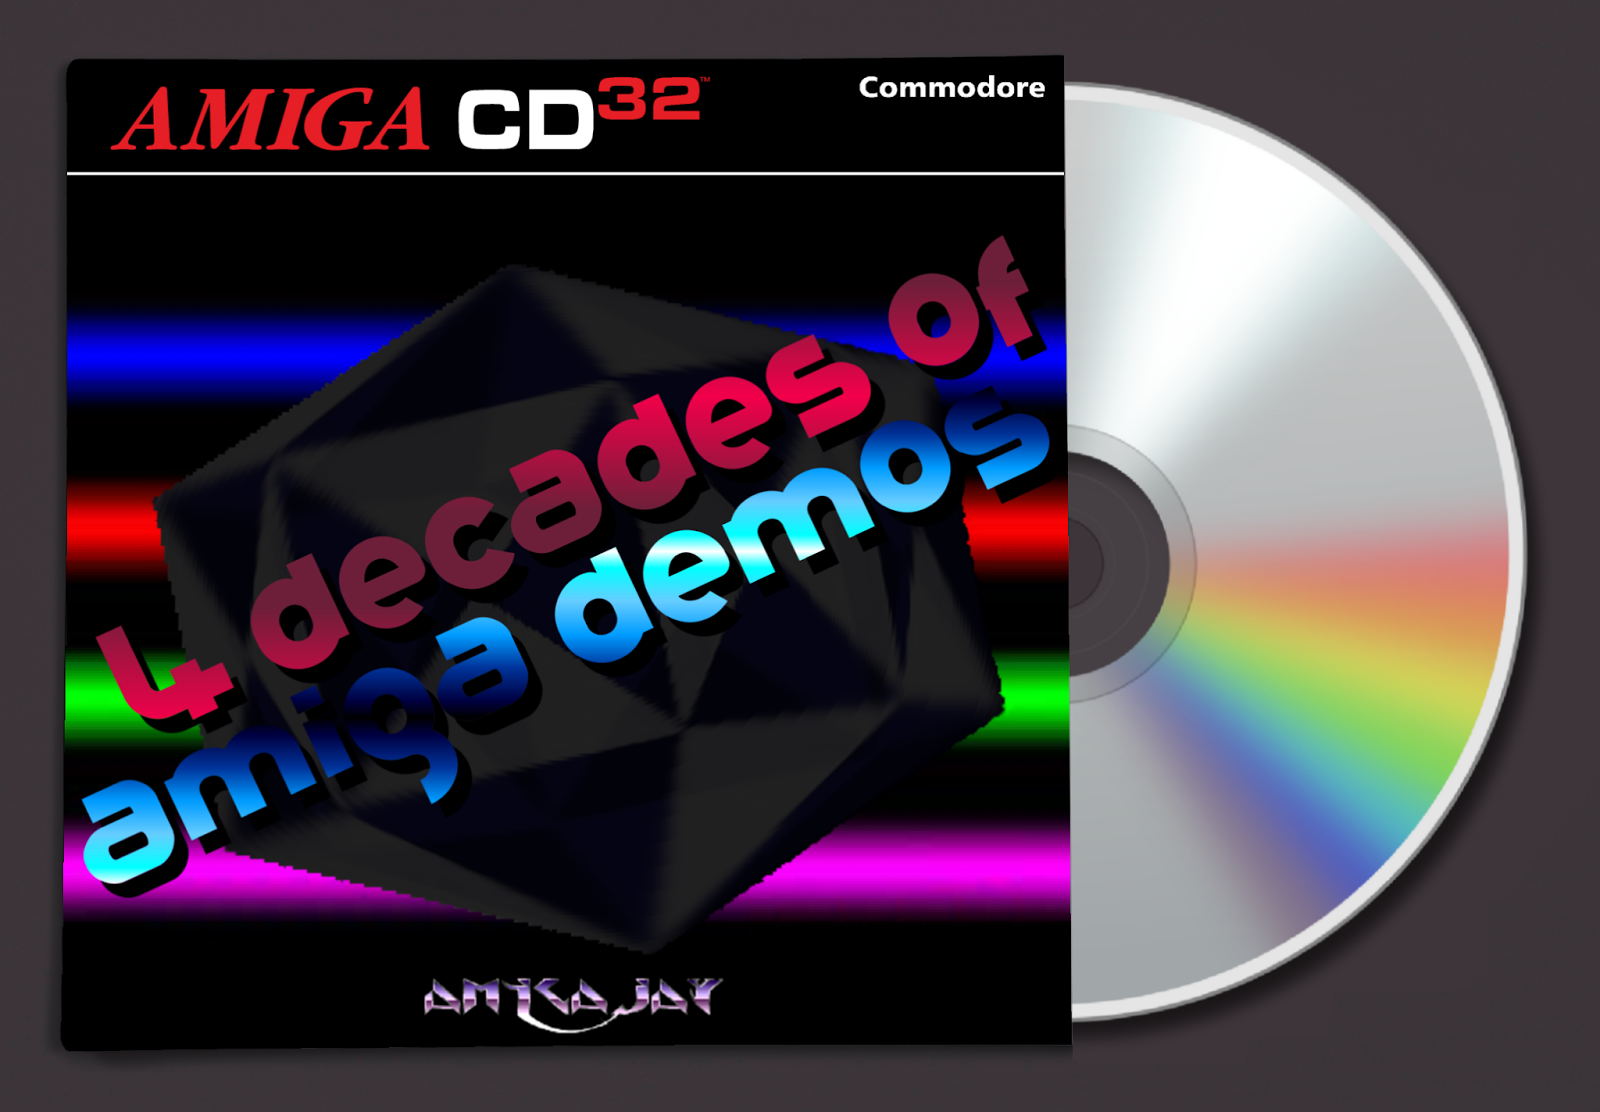 Cd dp. Amiga cd32. Commodore amiga cd32 игры. Commodore amiga cd32. Commodore amiga cd32 logo.